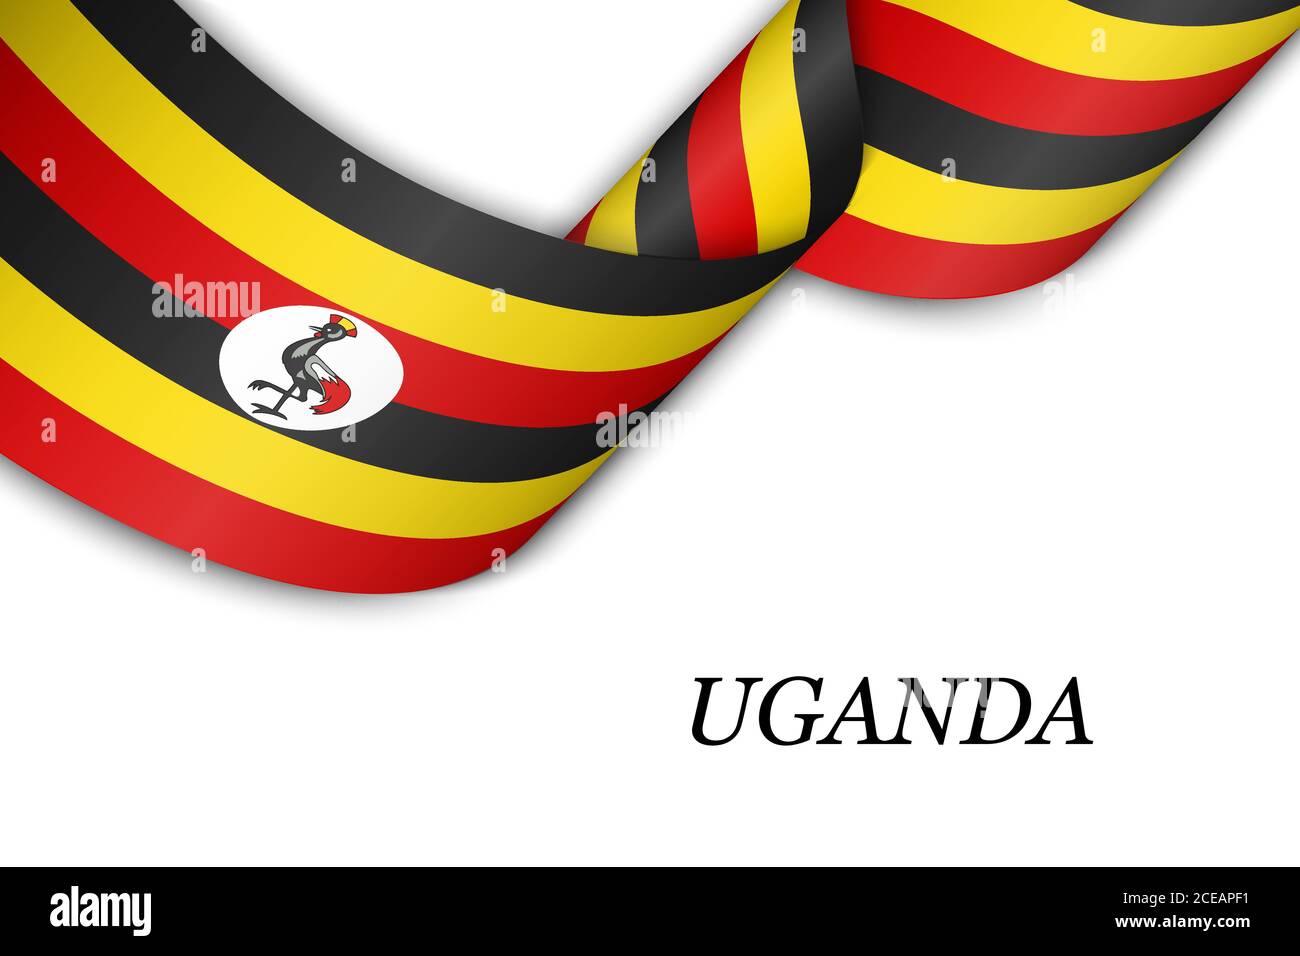 Waving ribbon or banner with flag of Uganda. Stock Vector